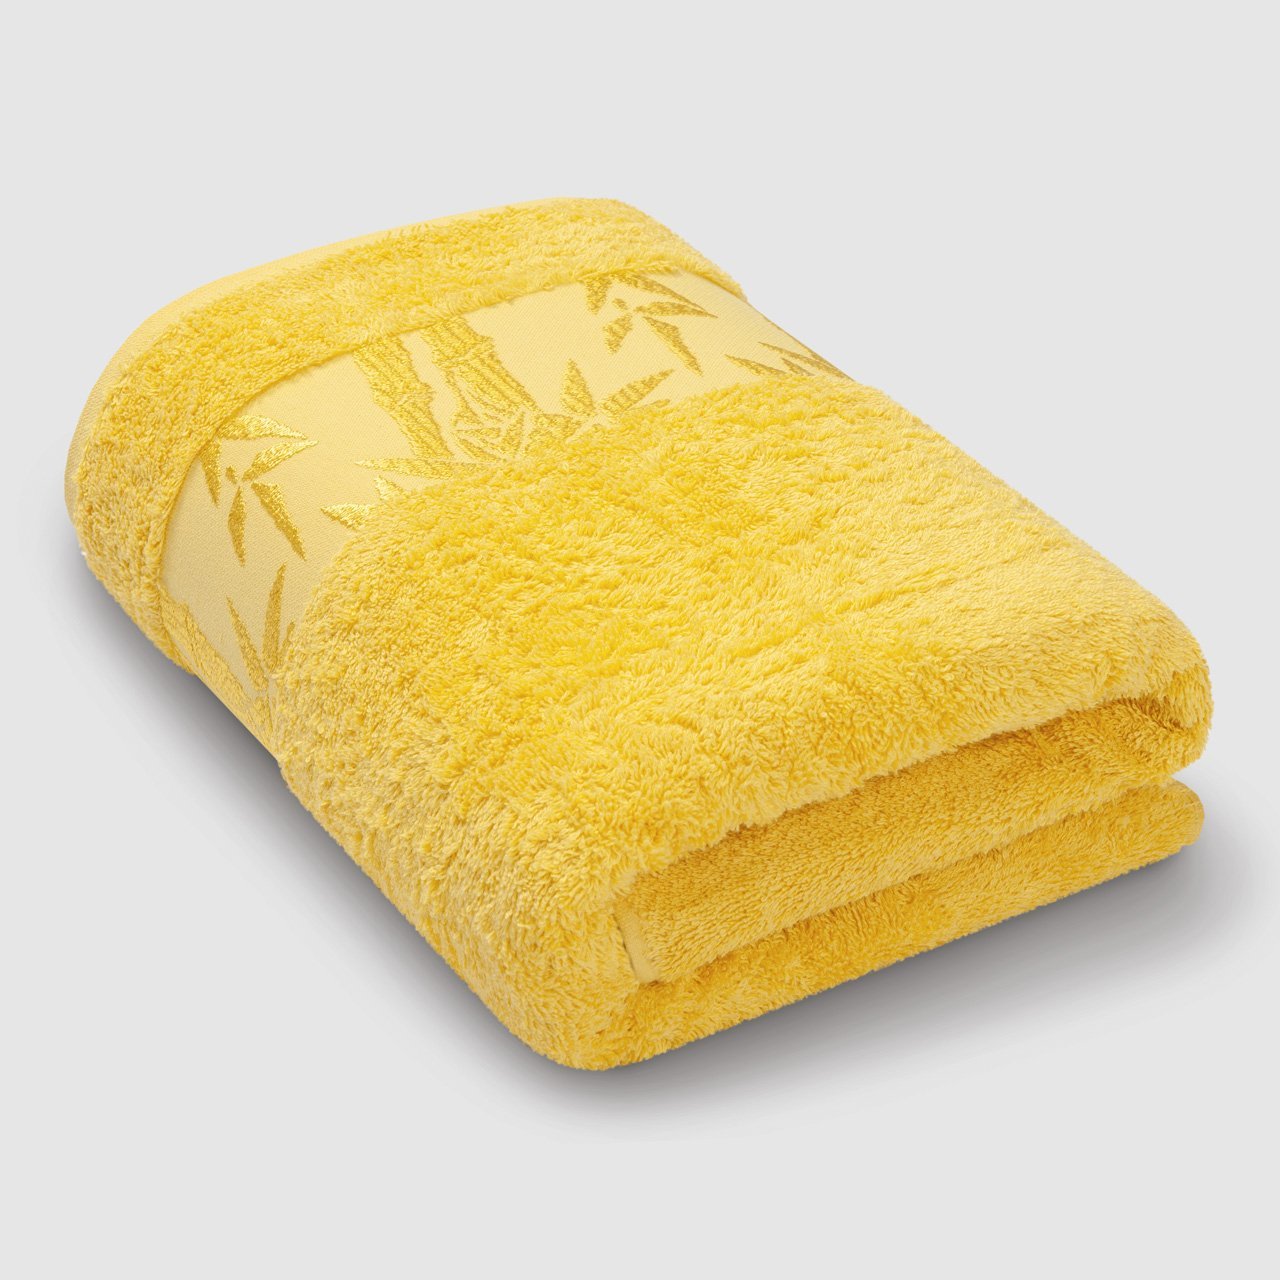 Полотенце Jonquil цвет: желтый (41х70 см), размер 40х70 см ecx759522 Полотенце Jonquil цвет: желтый (41х70 см) - фото 1